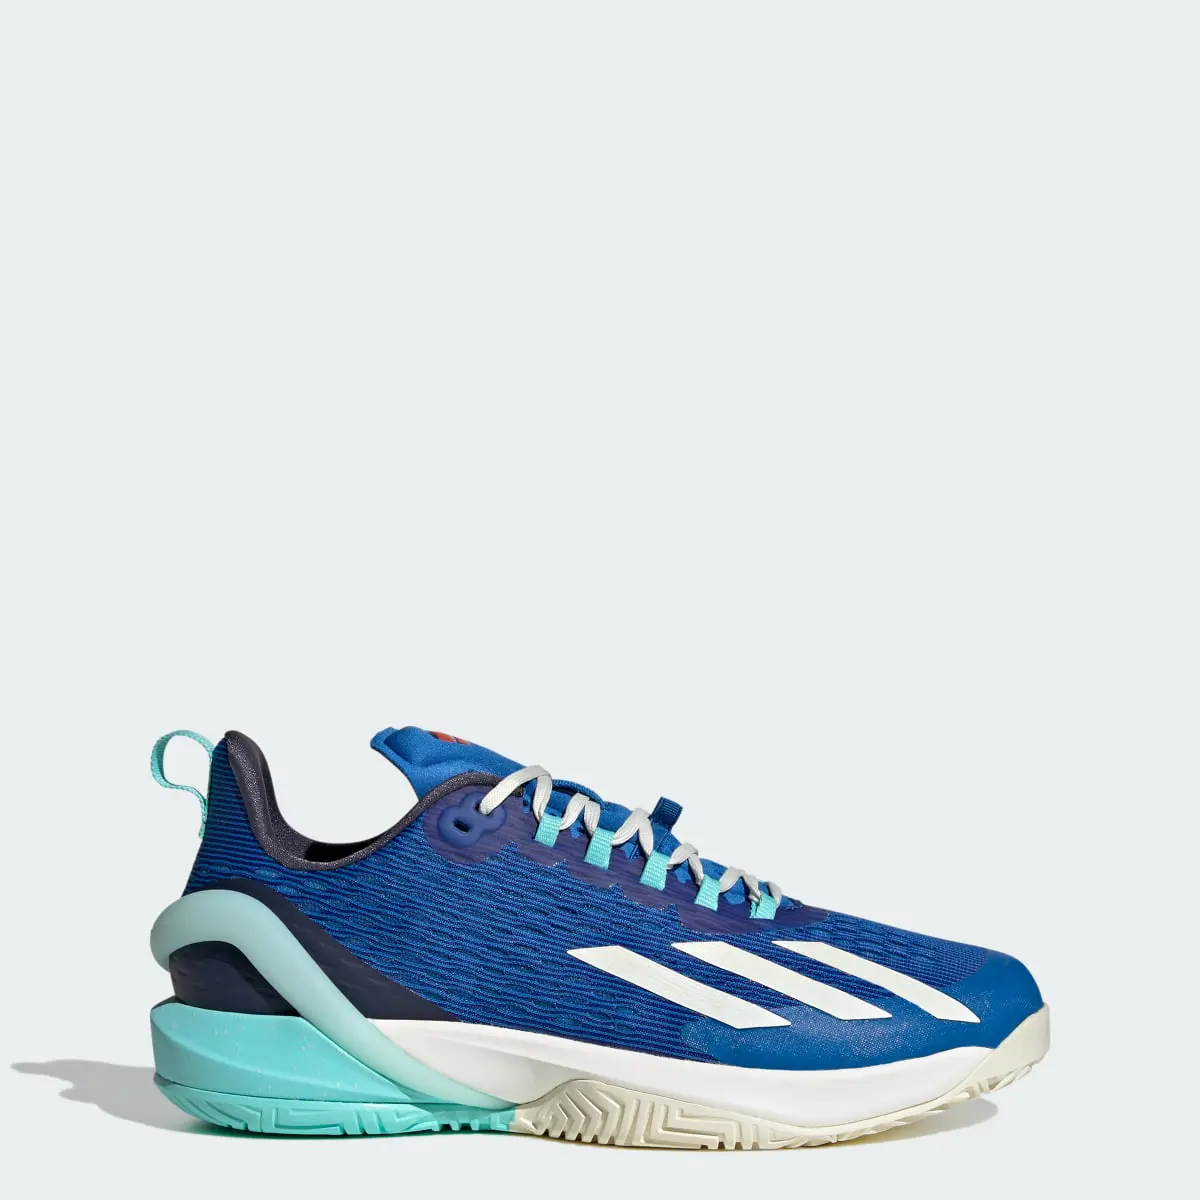 Adidas Chaussure de tennis adizero Cybersonic. 1